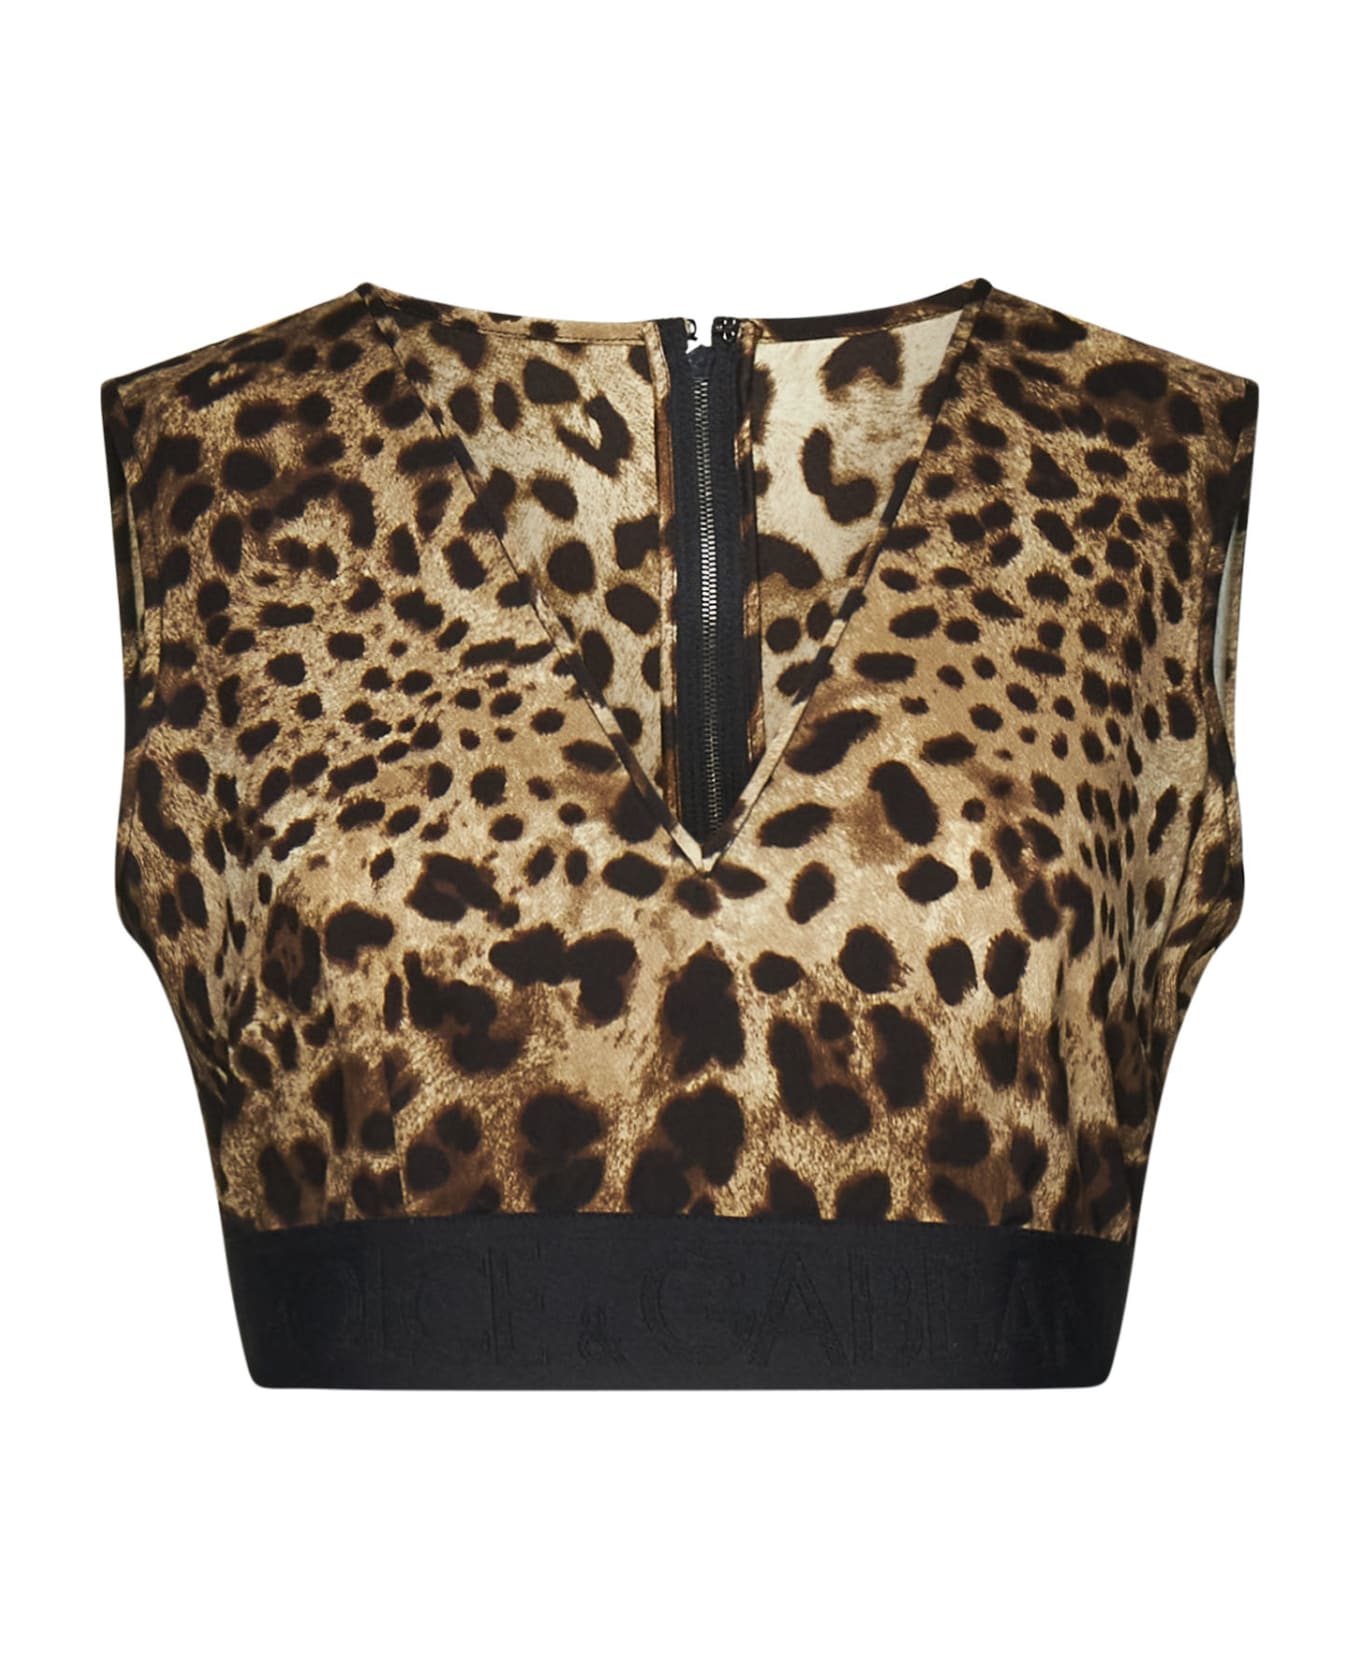 Dolce & Gabbana Leopard Printed Sleeveless Top - Leo new トップス